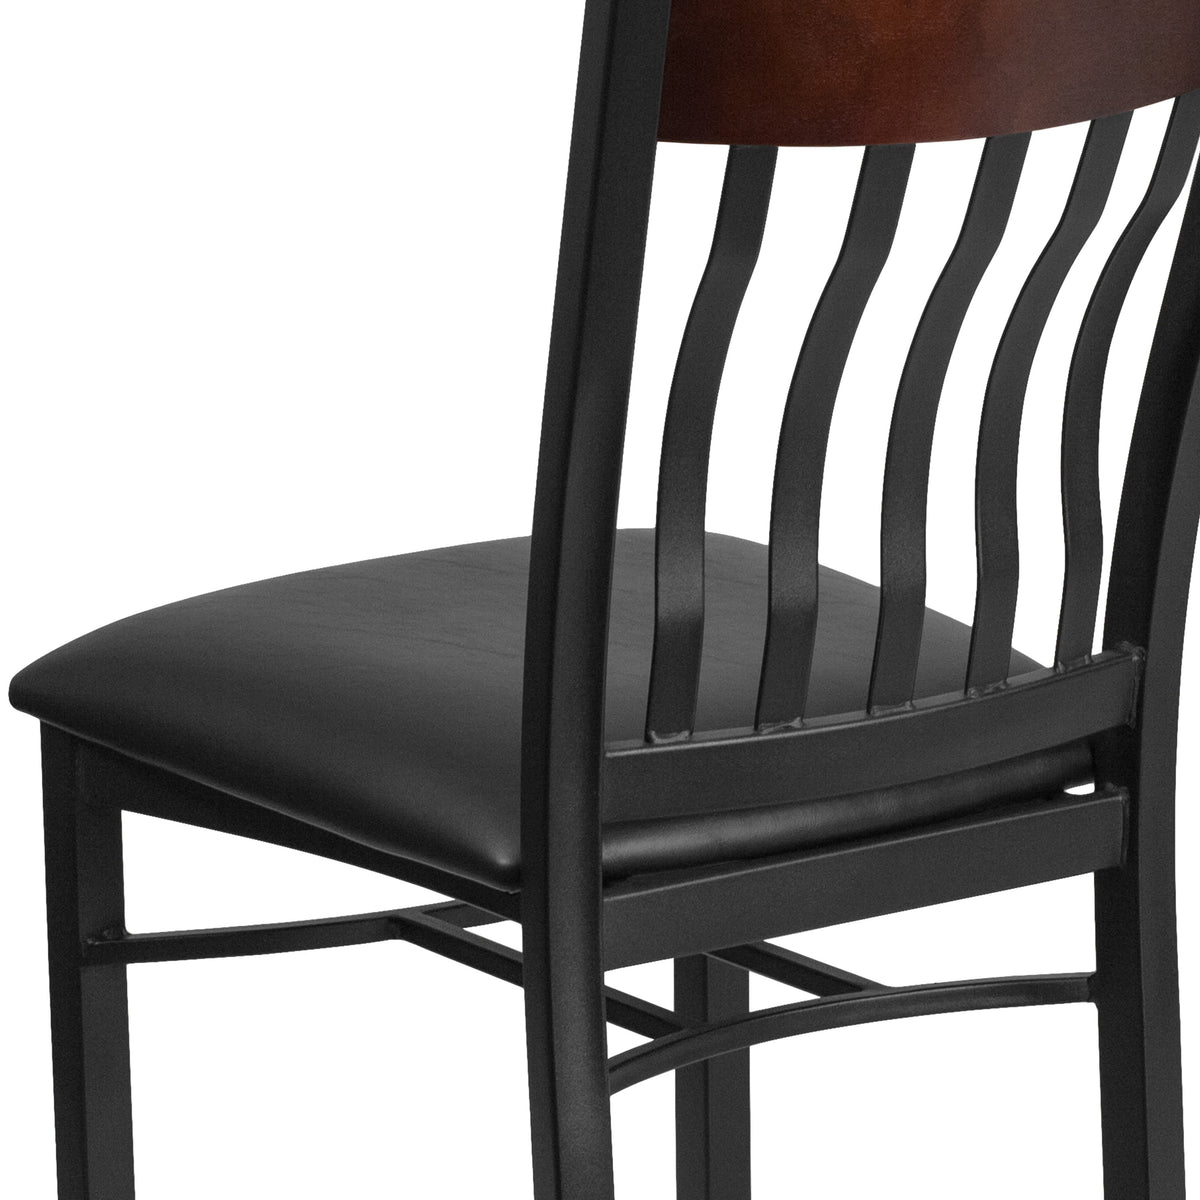 Walnut |#| Vertical Back Black Metal and Walnut Wood Restaurant Chair with Black Vinyl Seat